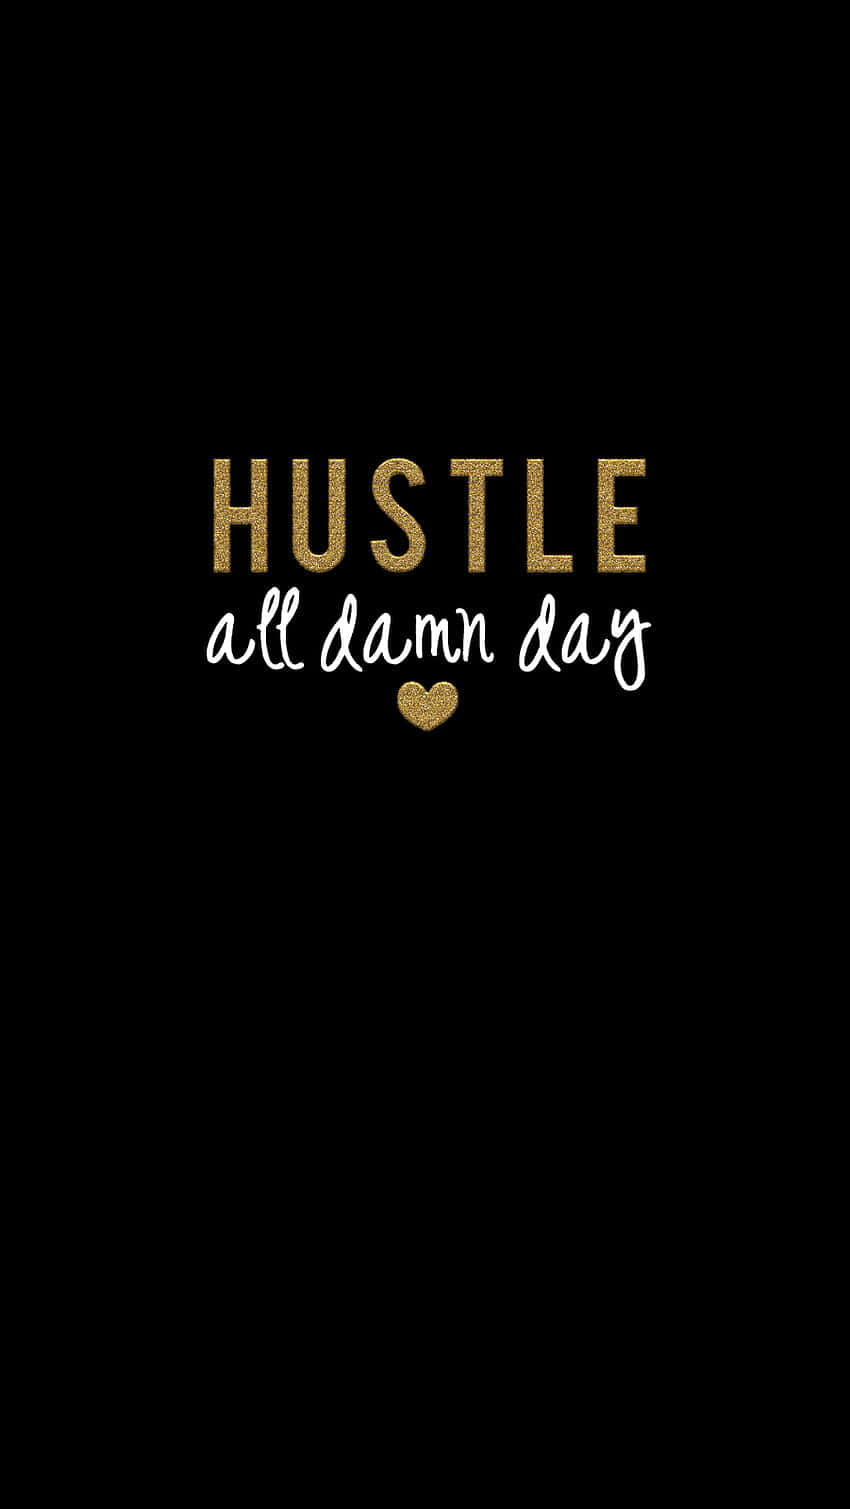 Hustle All Dawn Days - Tee Shirt Wallpaper